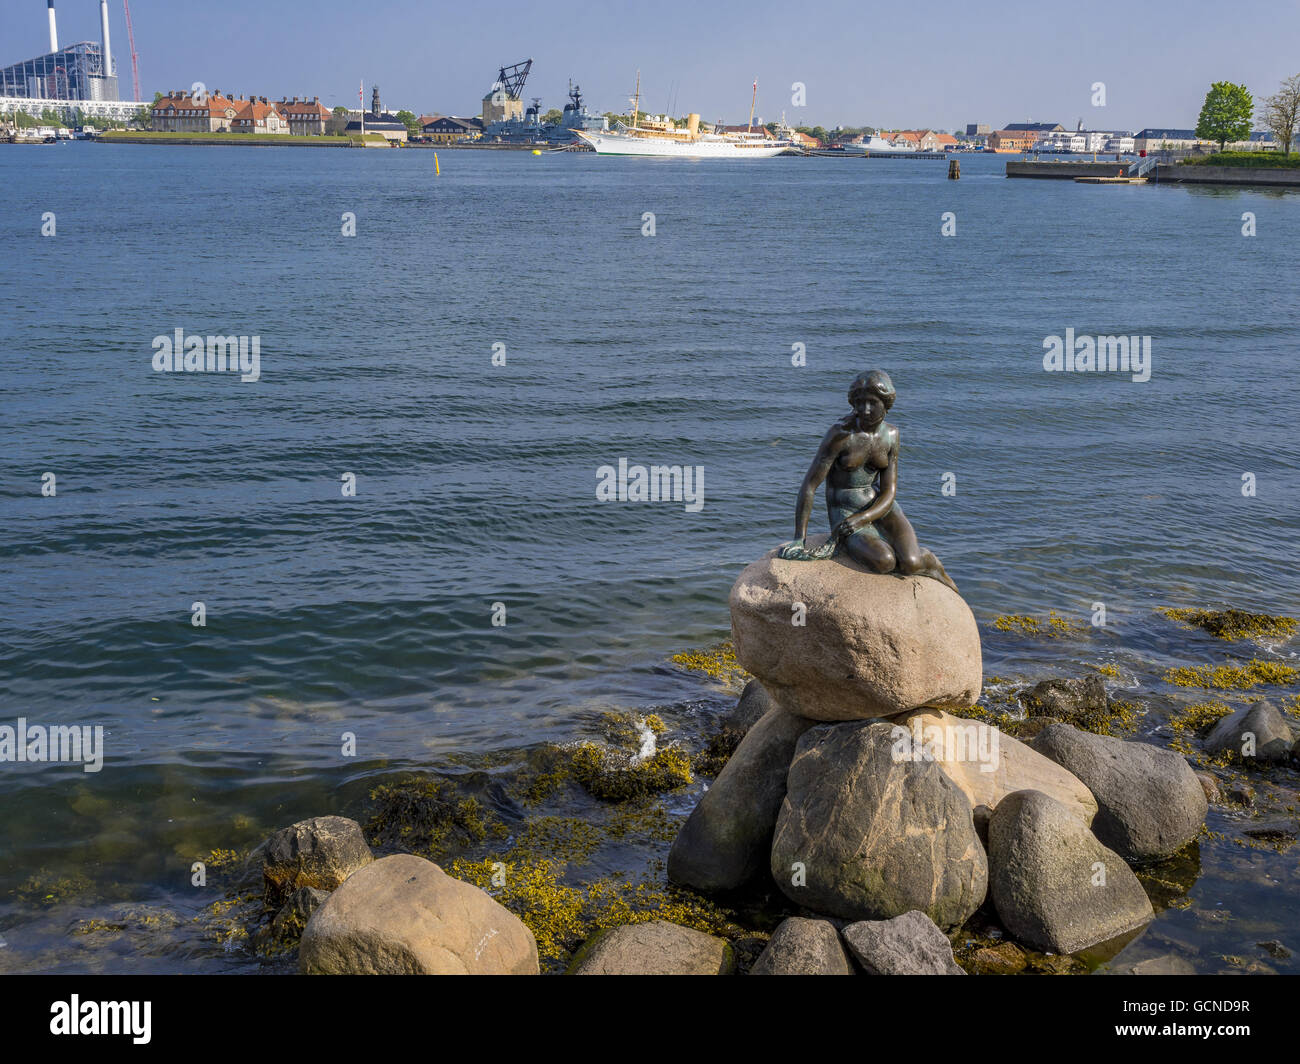 The Mermaid, sculpture in Copenhagen, Denmark Stock Photo - Alamy